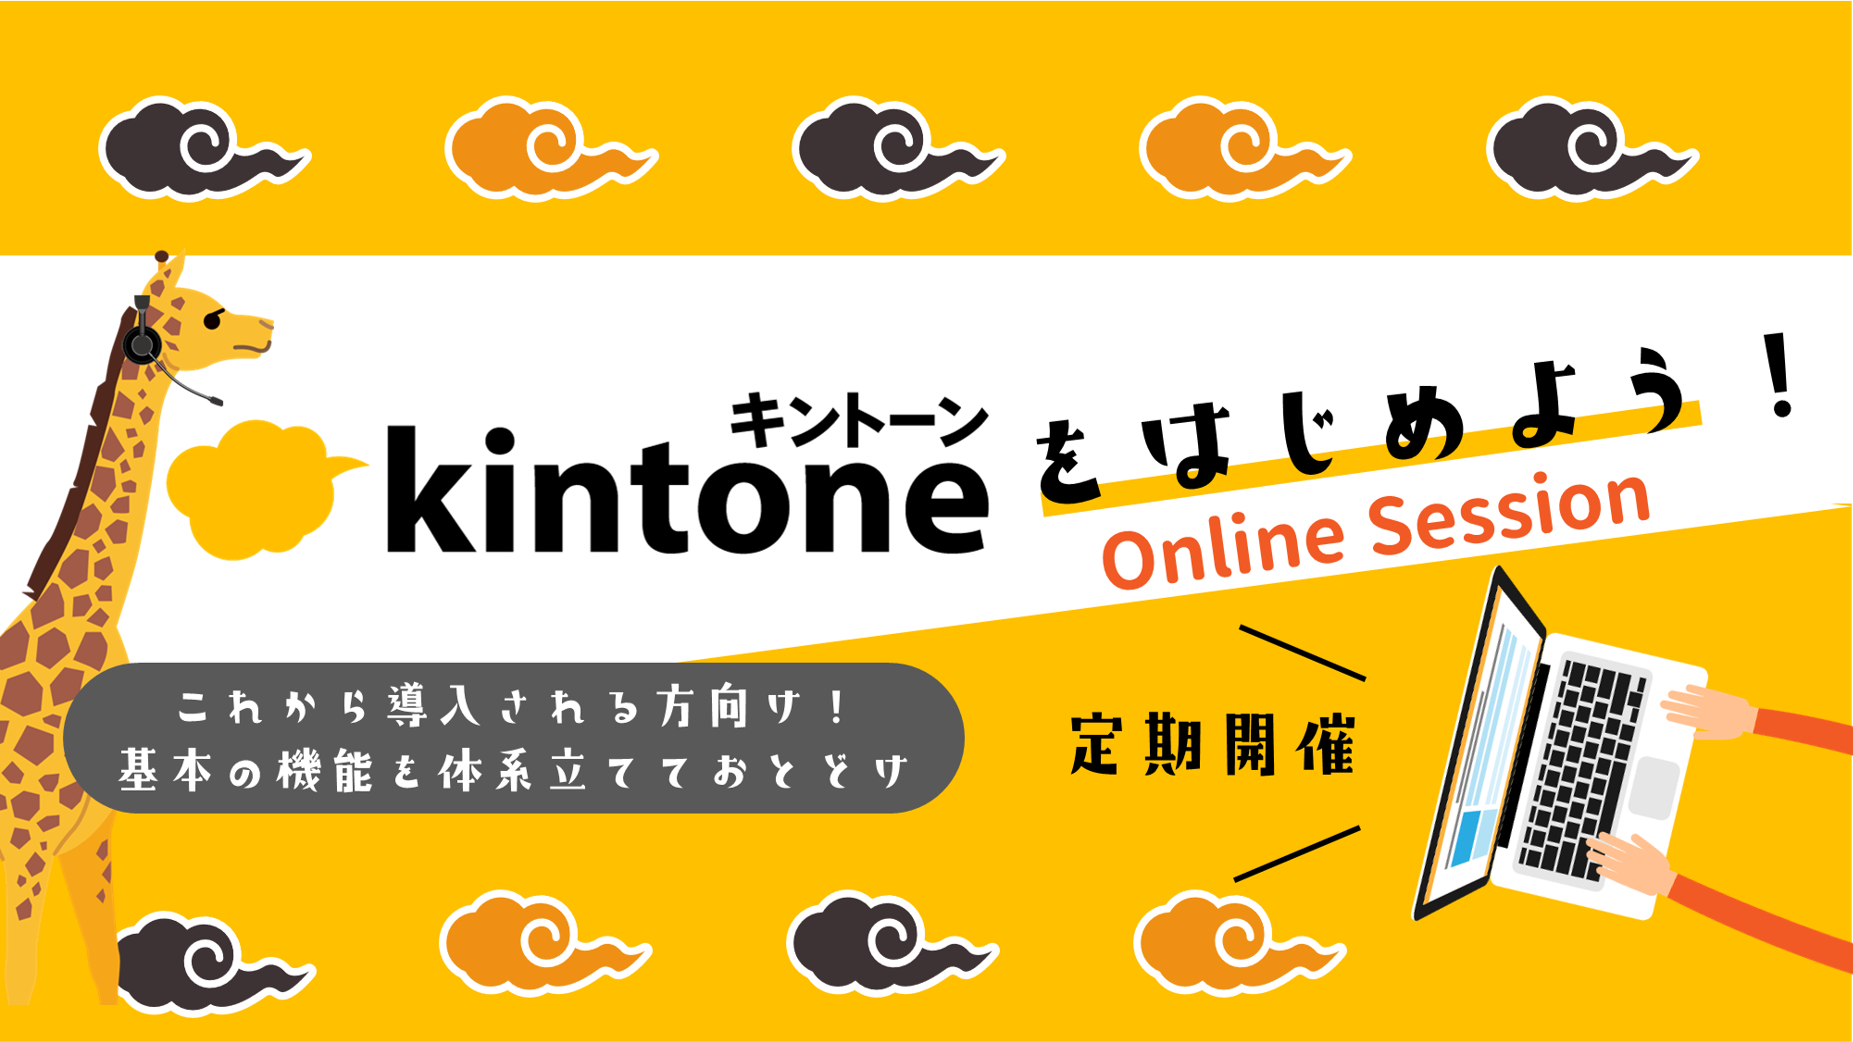 Start_kintone_2021.png